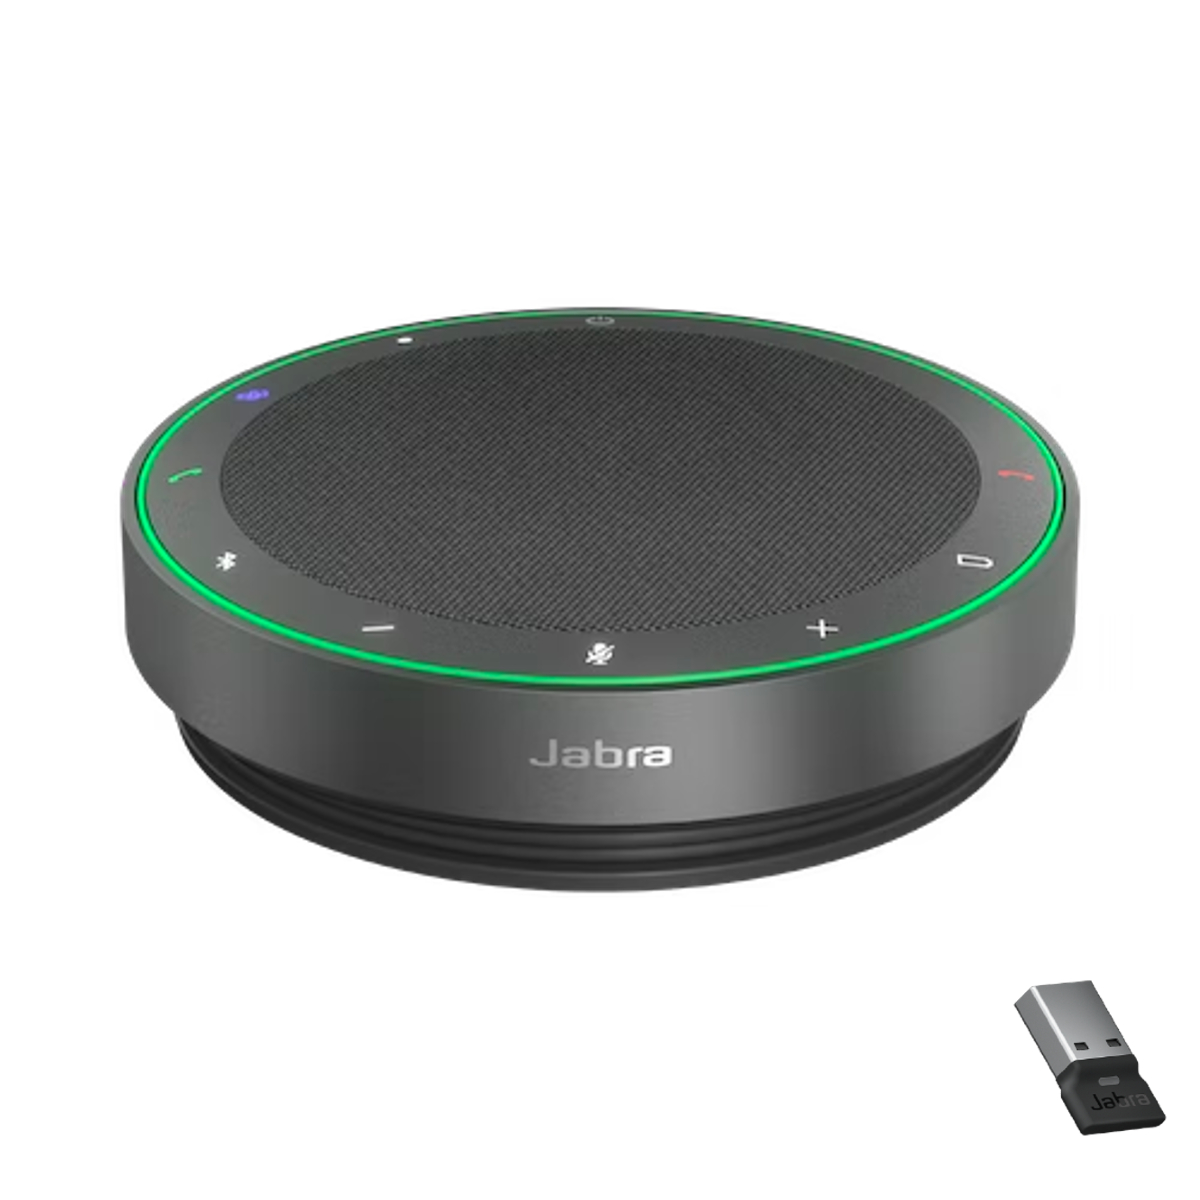 Macondo 380A Networks UC Jabra | (2775-419) Speak2 Speakerphone Bluetooth USB-A USB Adapter 75 Link | With